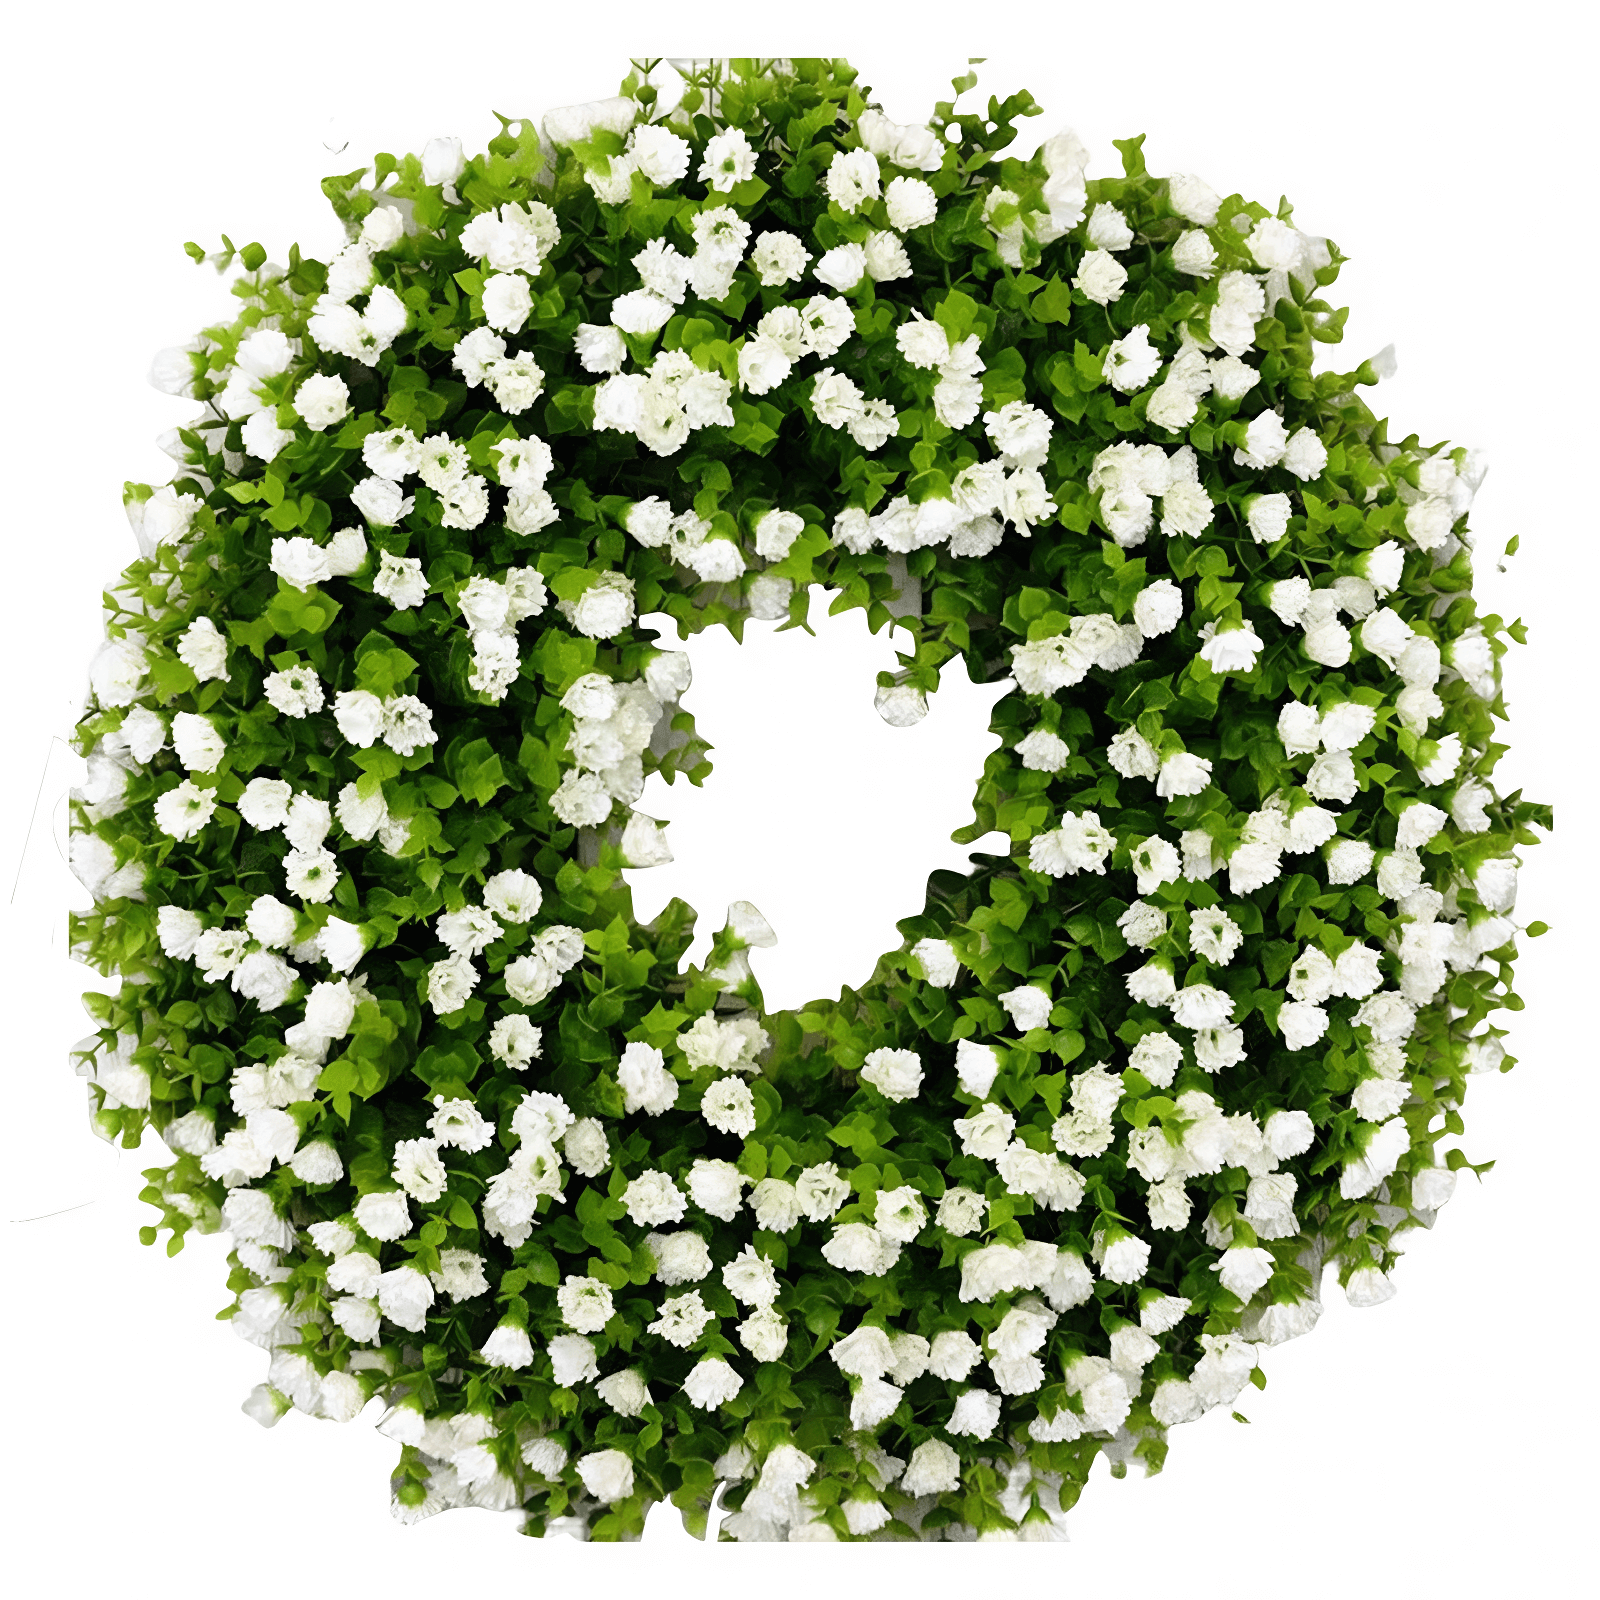 faithful wishes wreath on a white background